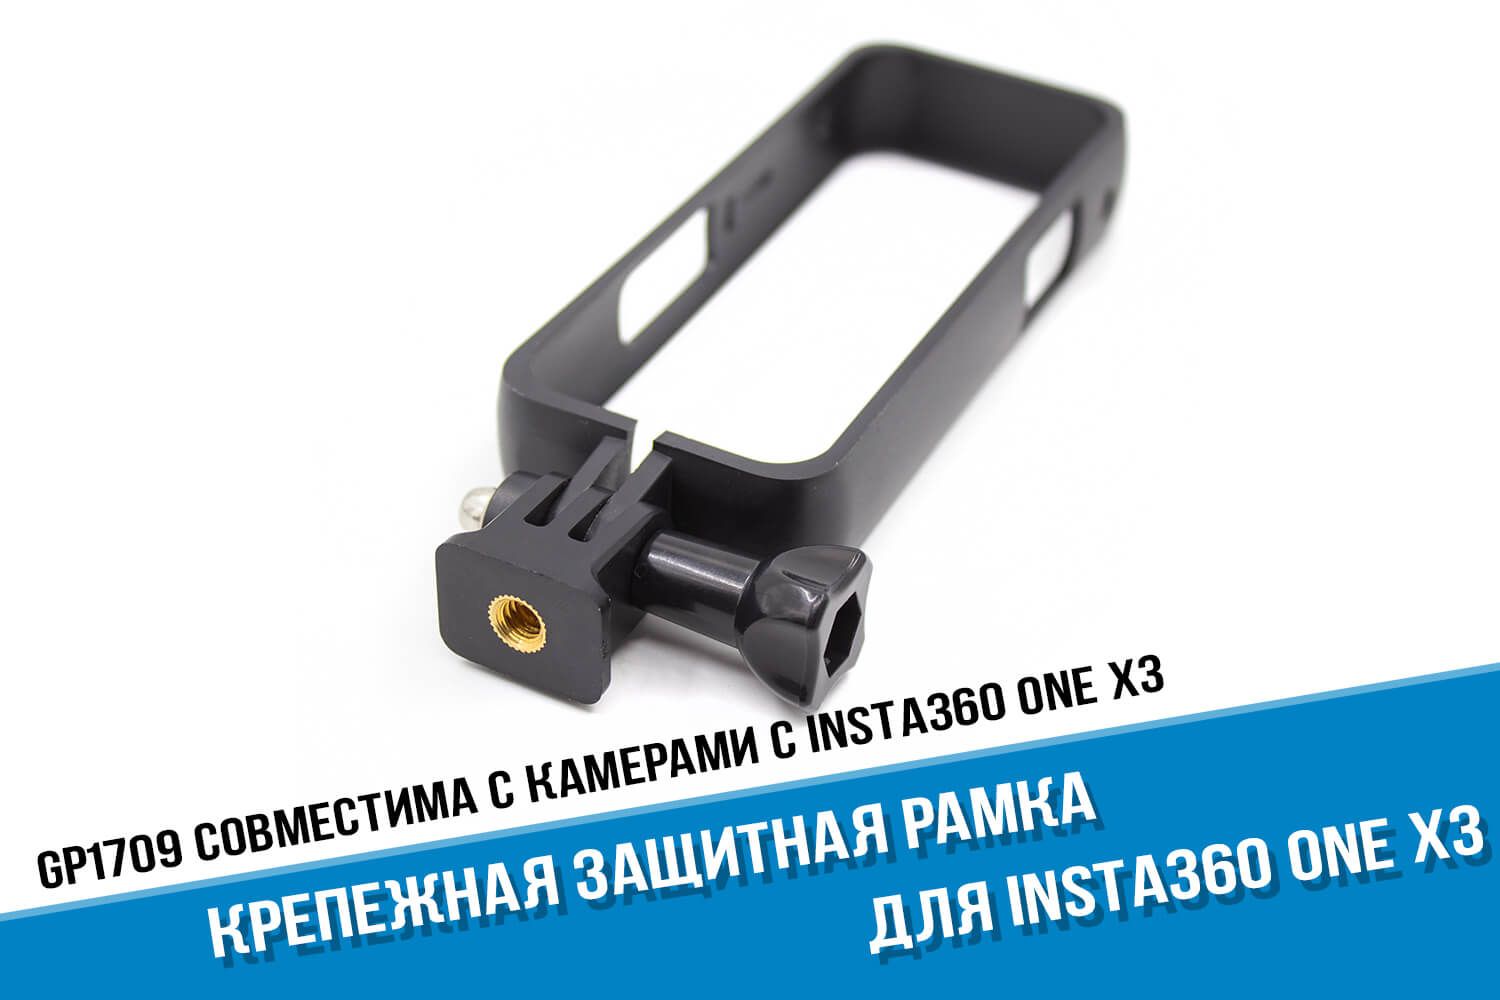 Рамка для камеры Insta360 One X3